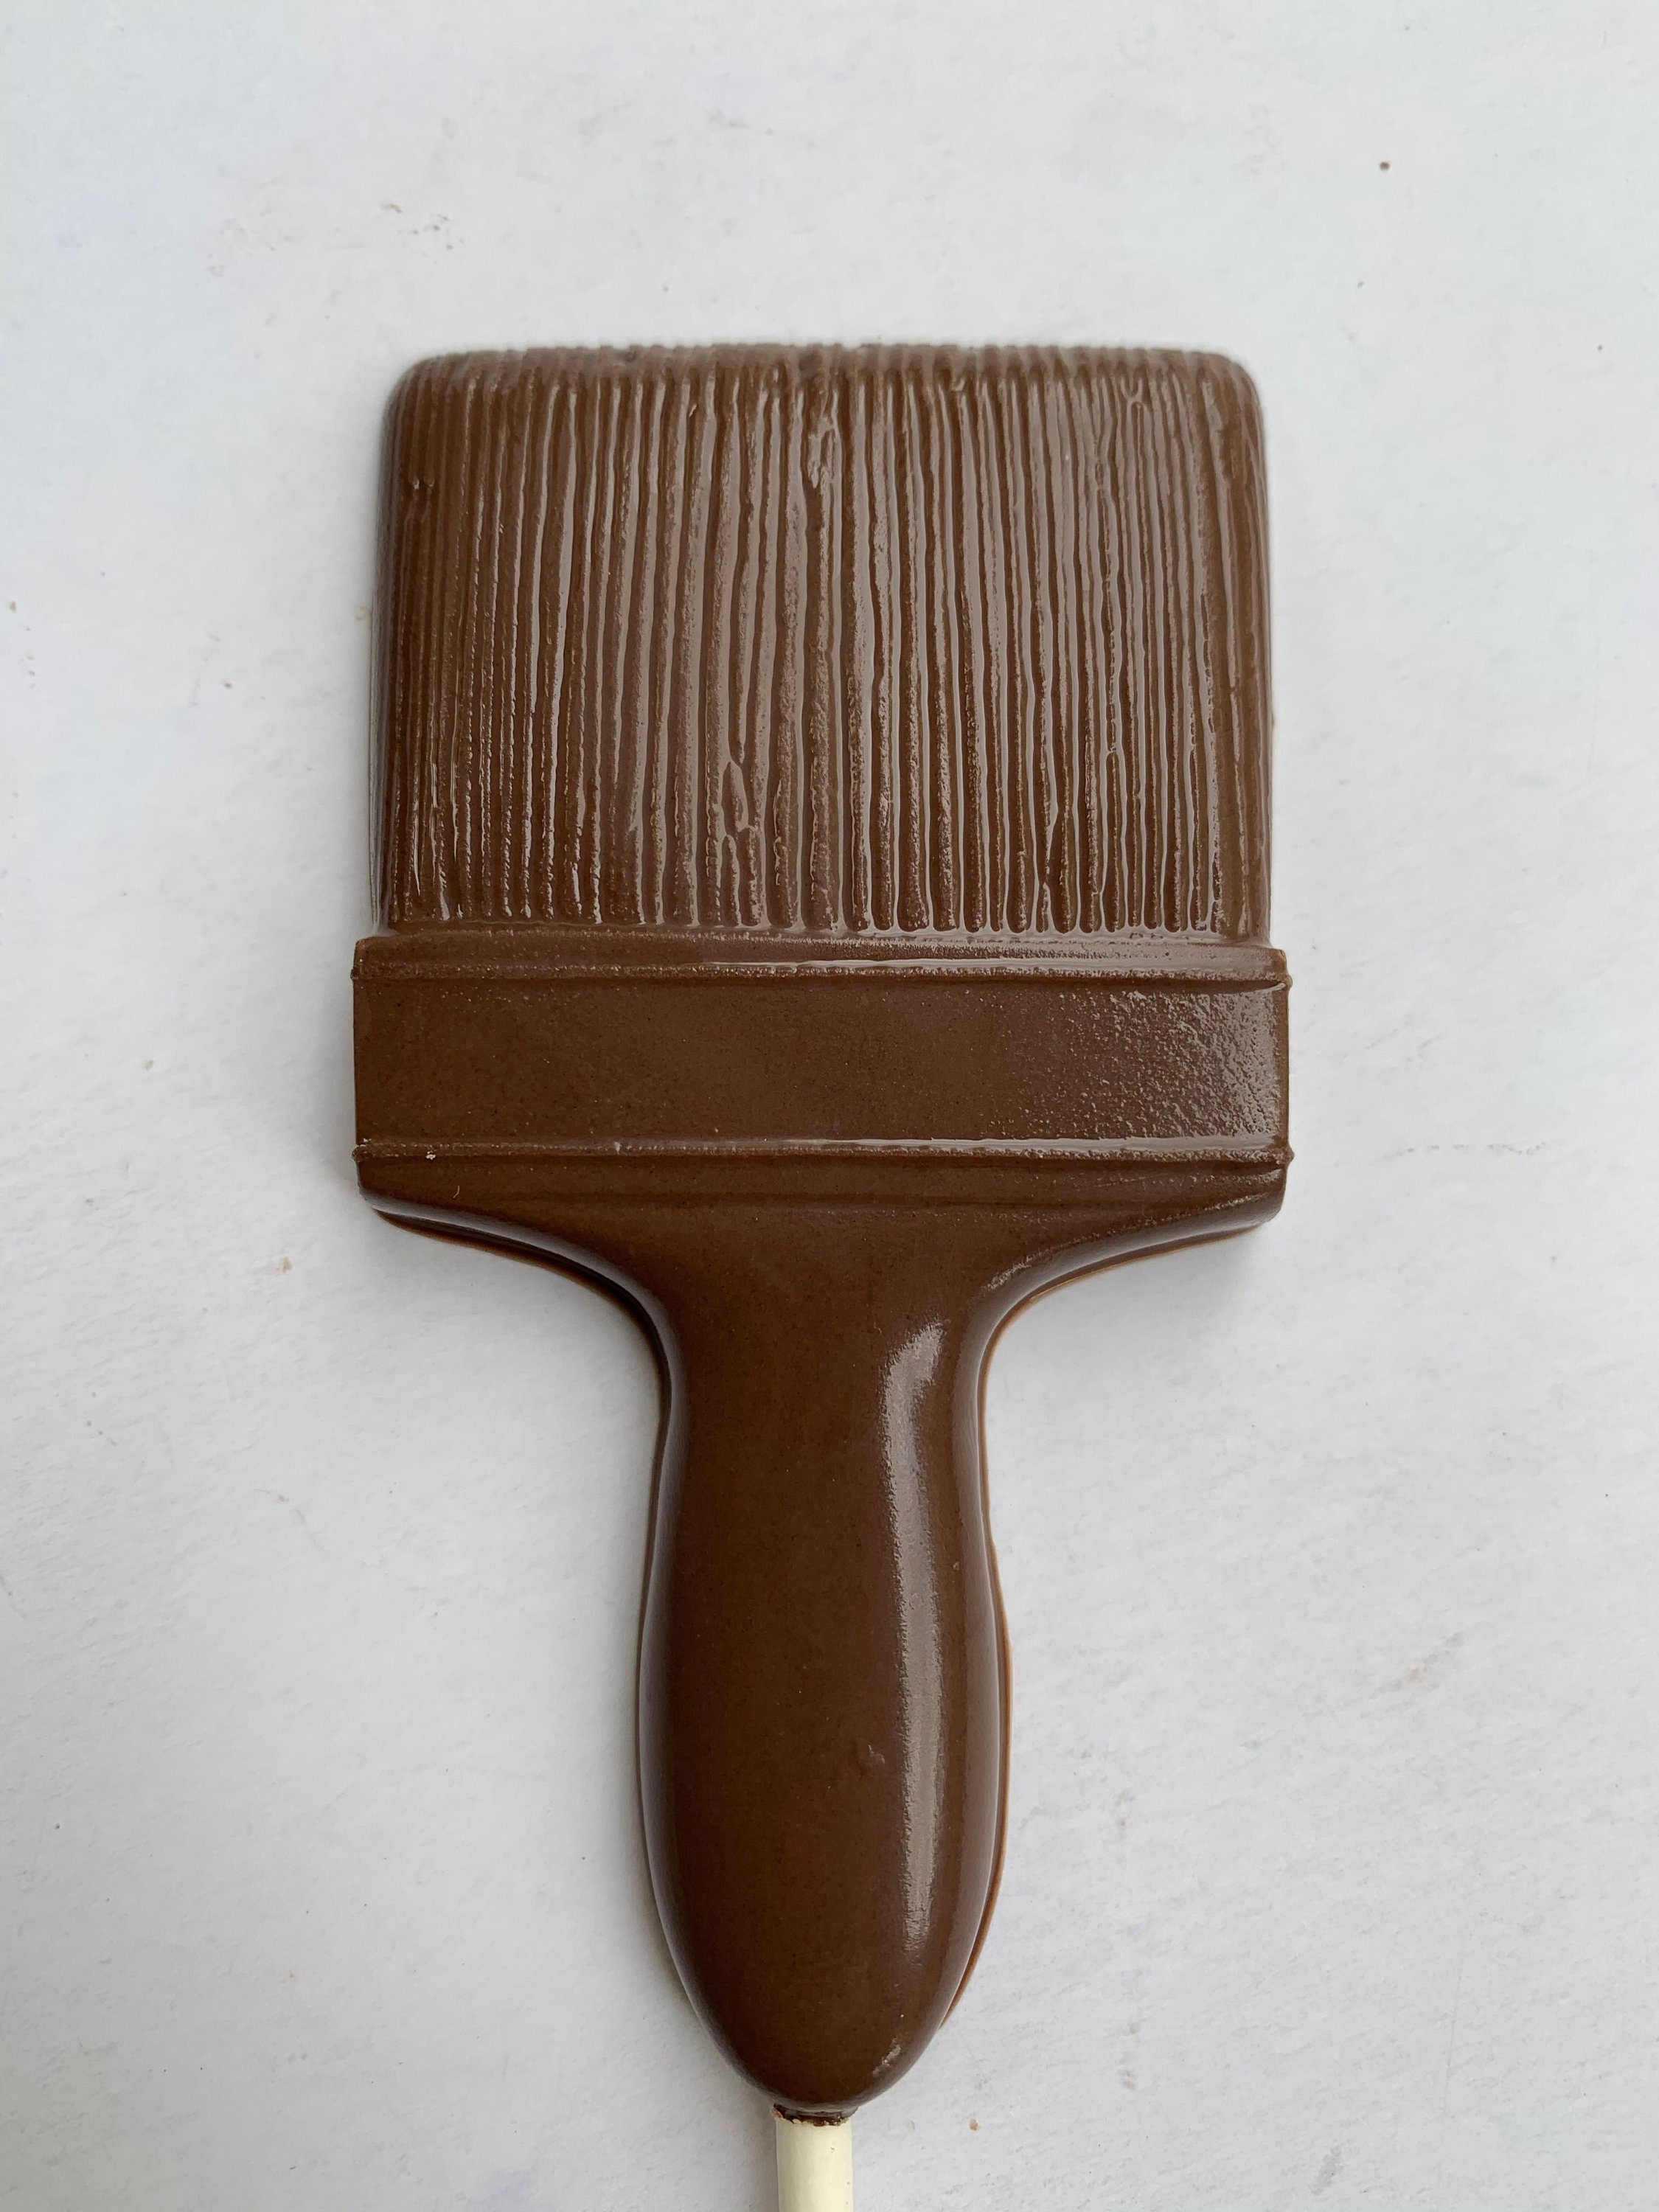 Chocolate Paint Brush Lollipops -  Israel